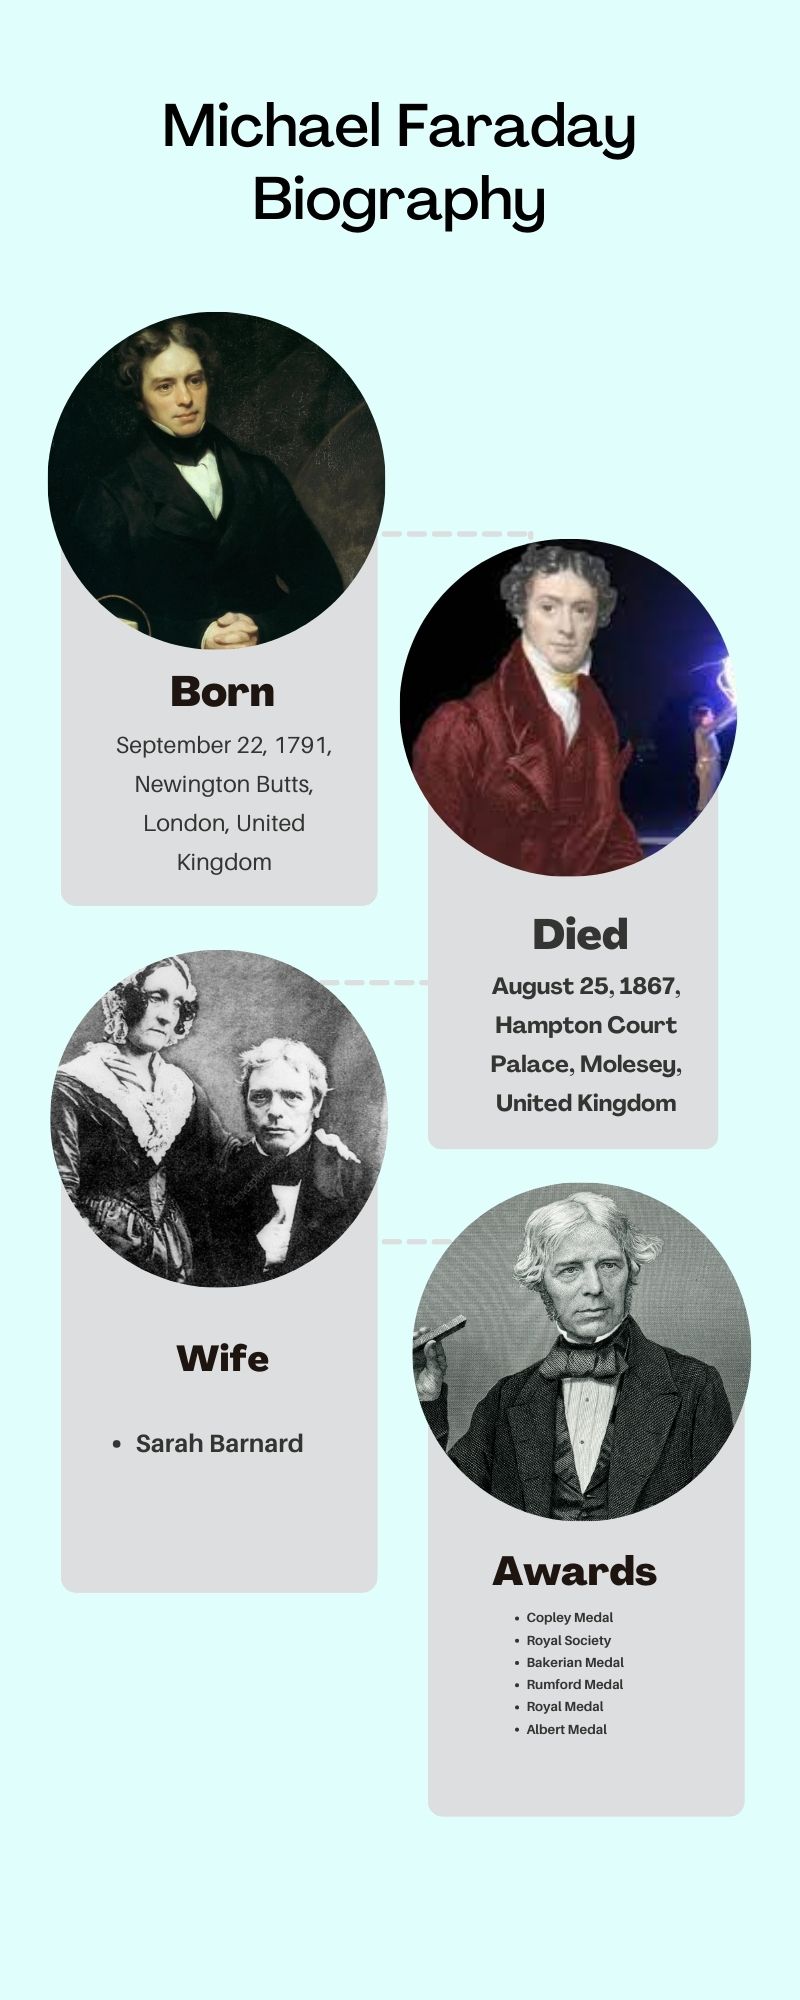 Michael Faraday Biography